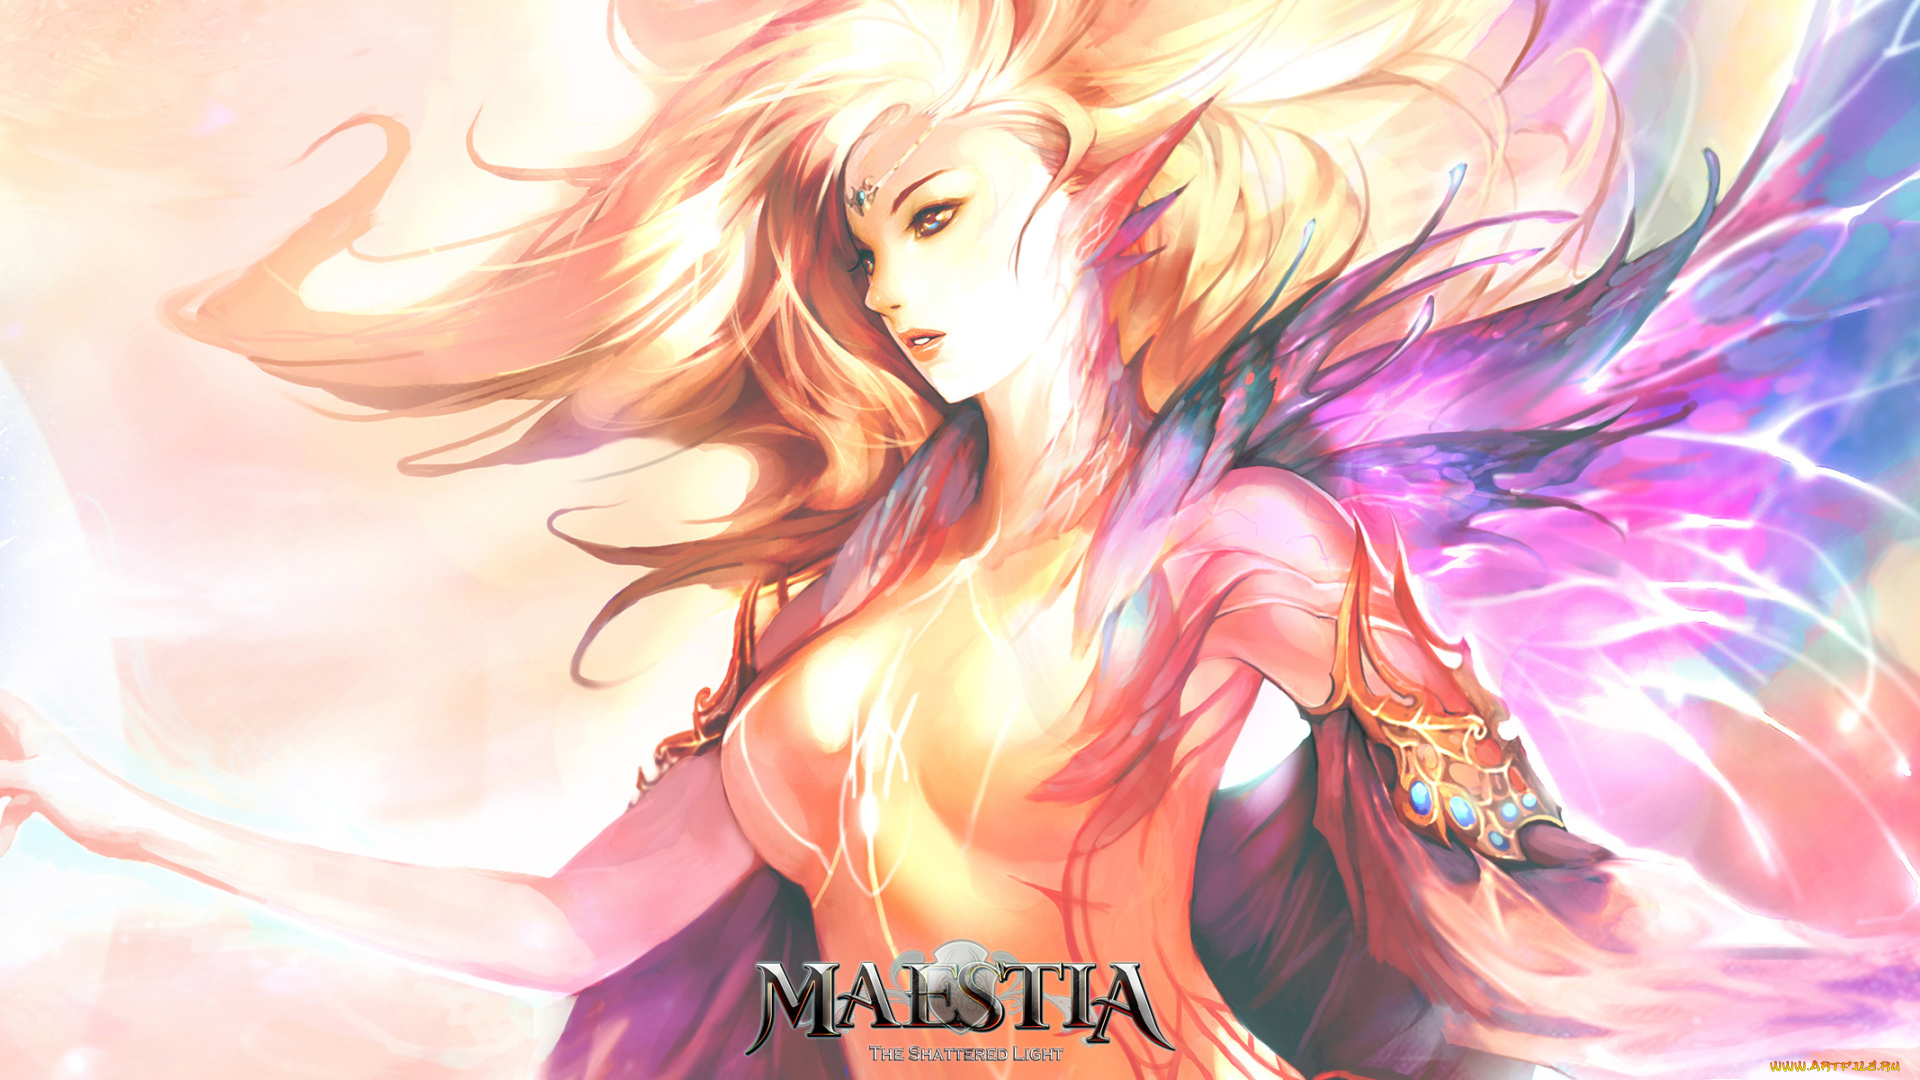 maestia, artwork, видео, игры